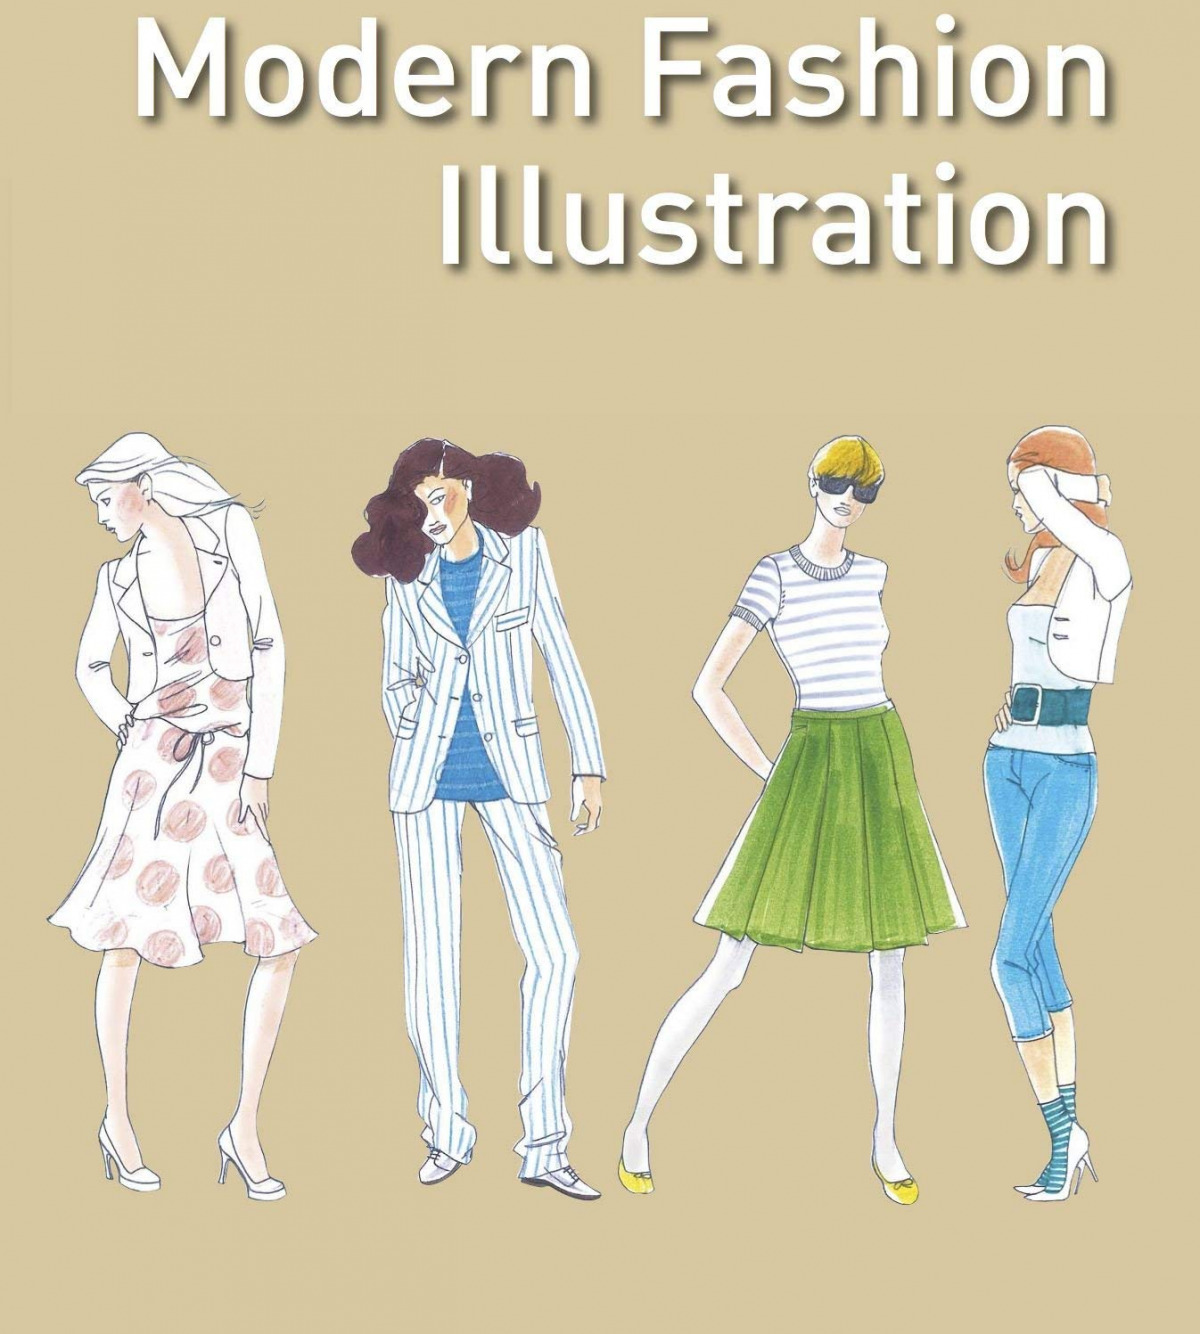 Modern fashion illustration - Vv.Aa.